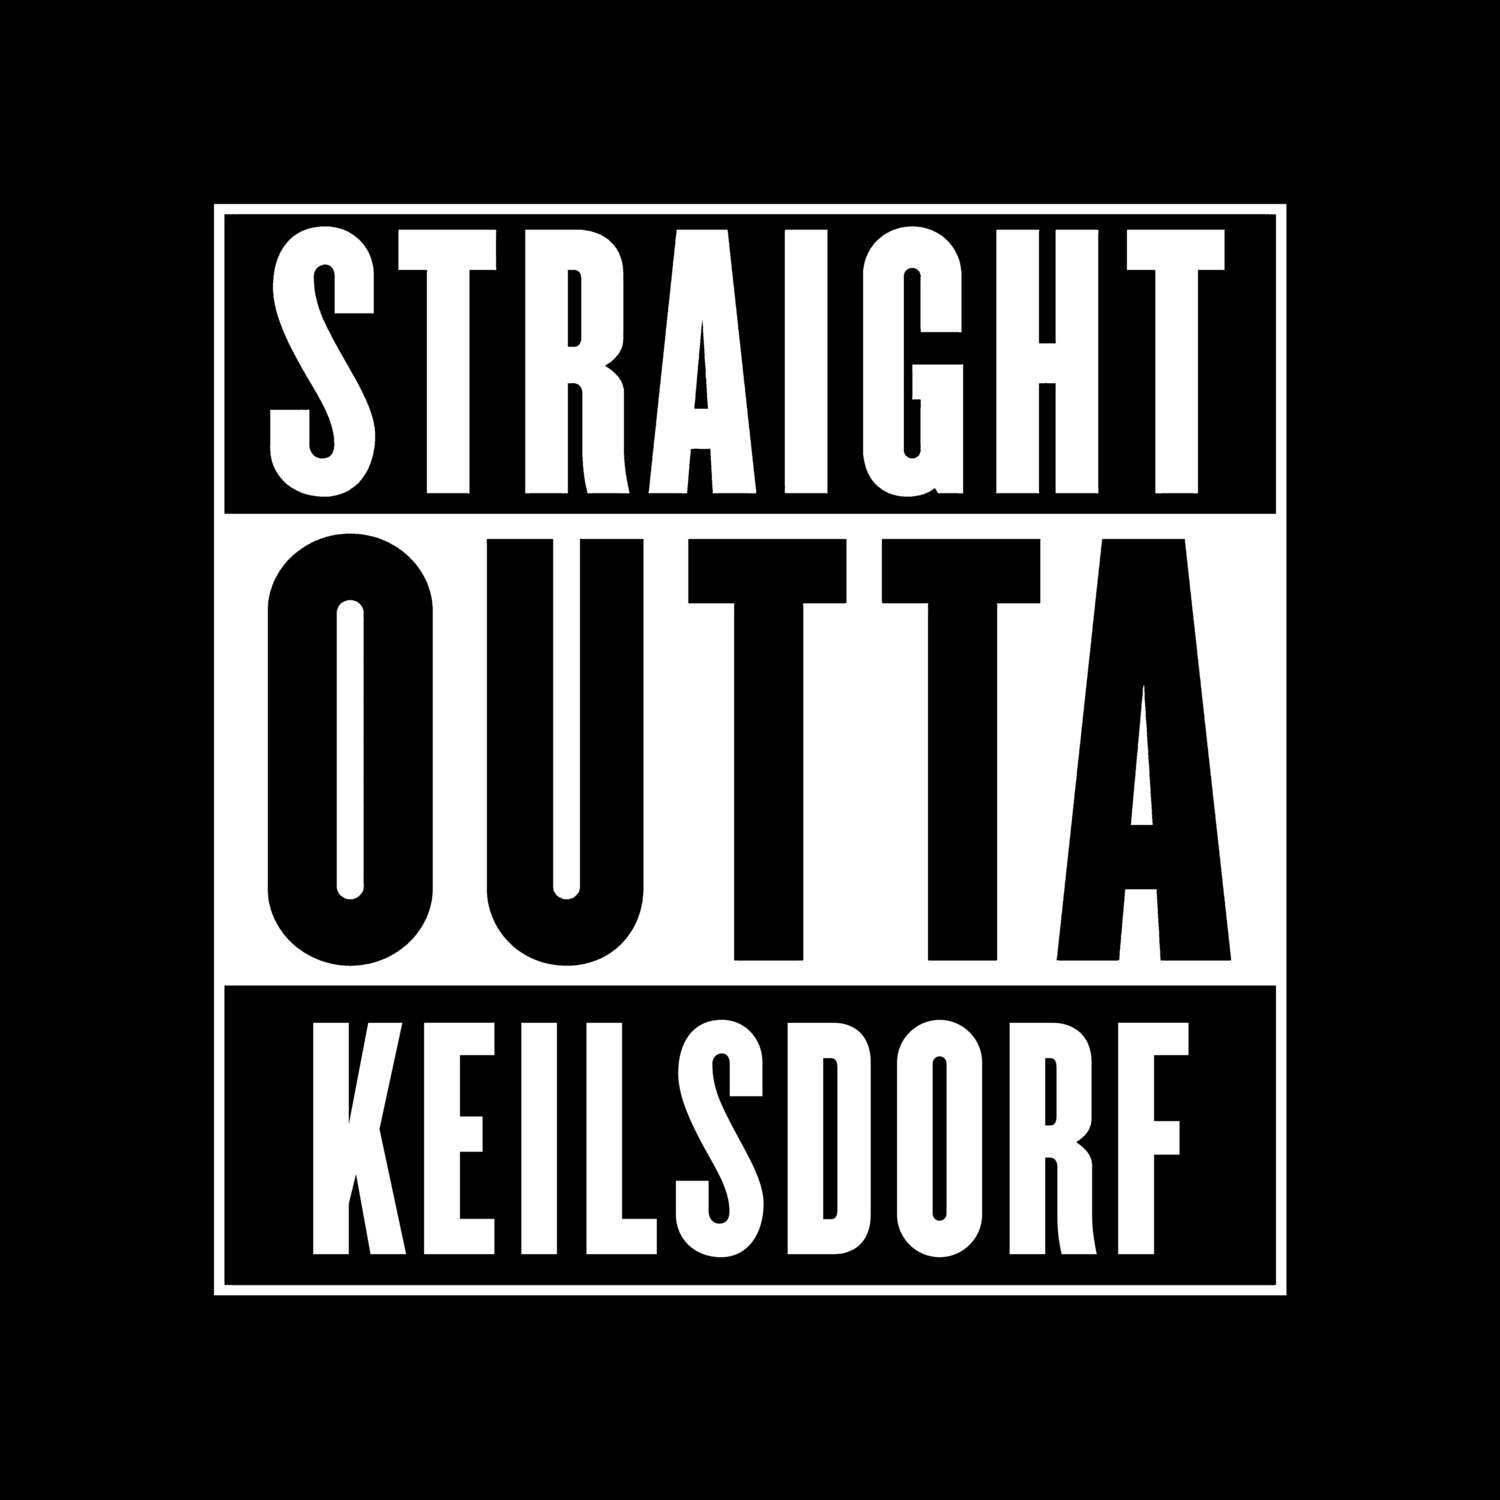 Keilsdorf T-Shirt »Straight Outta«